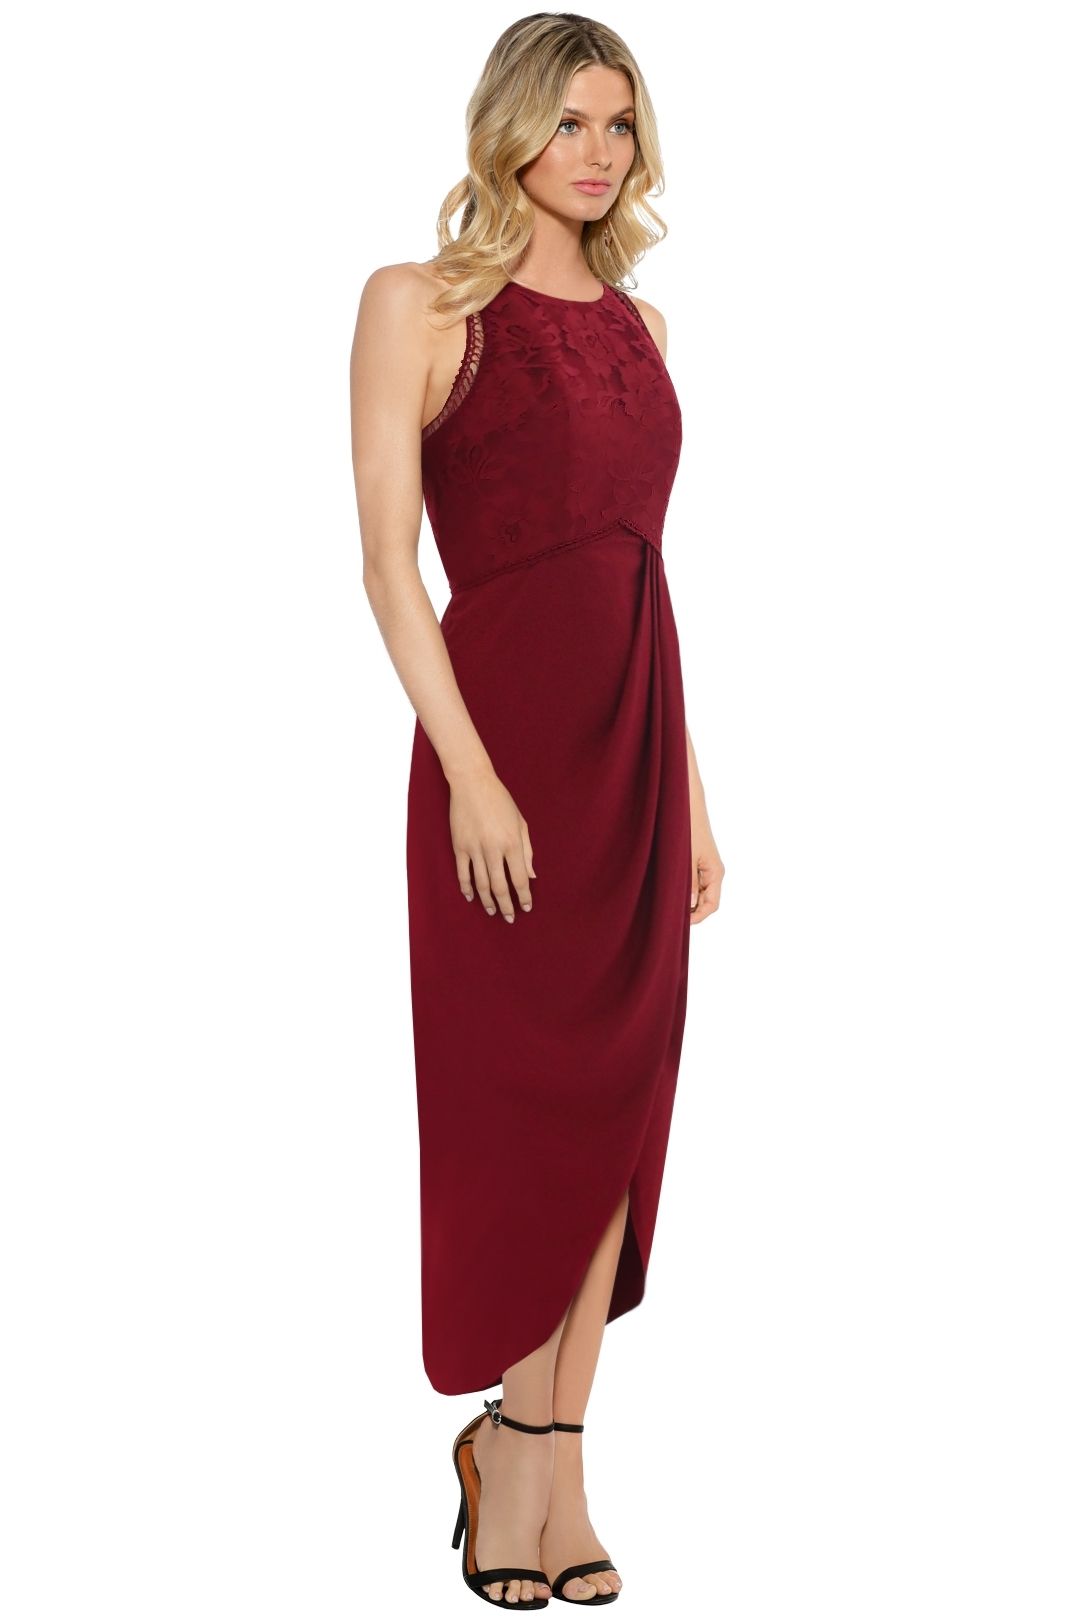 The Dress Shoppe - Spirit Carnivale Dress - Red - Side